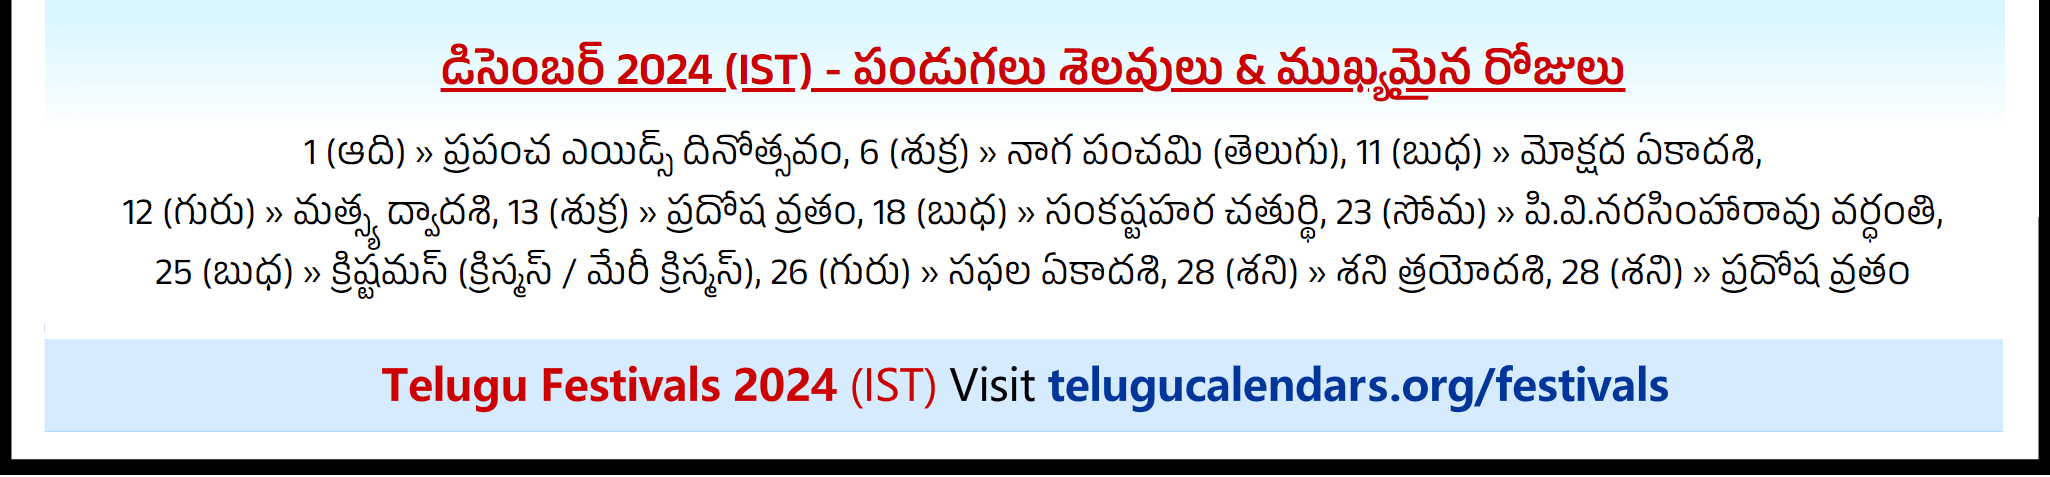 Telugu Festivals 2024 December London